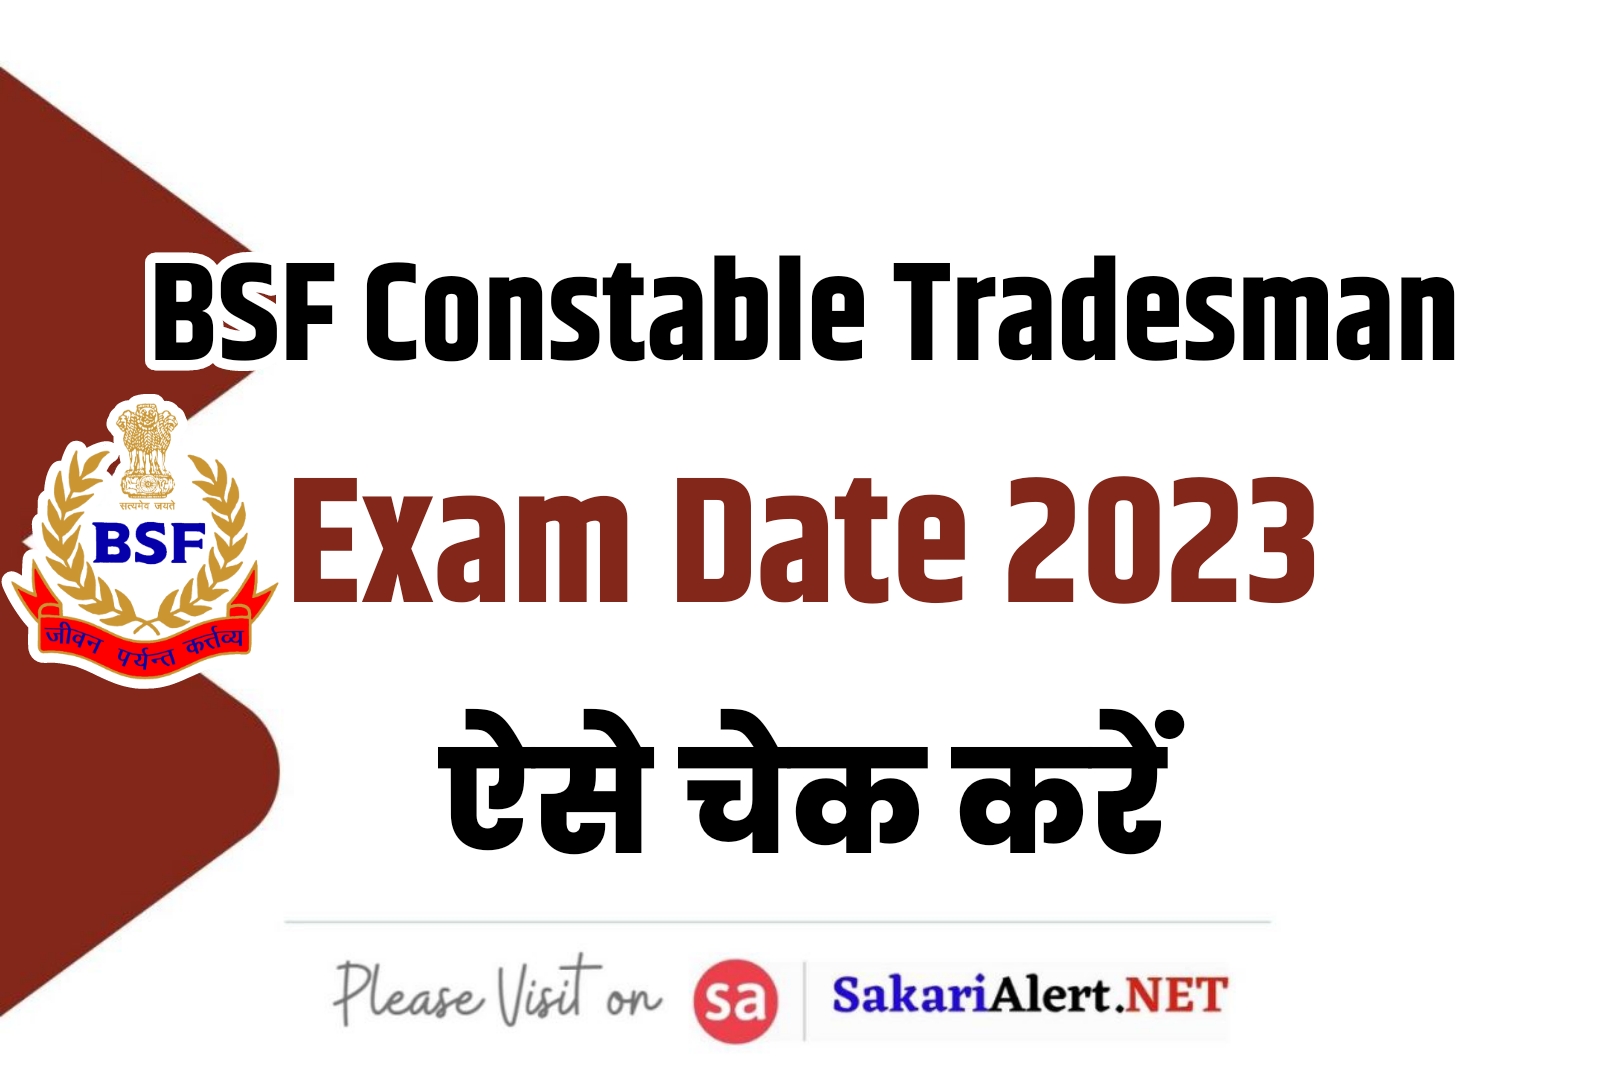 BSF Constable Tradesman Exam Date 2023 | बीएसएफ कांस्टेबल ट्रेड्समैन परीक्षा तिथि